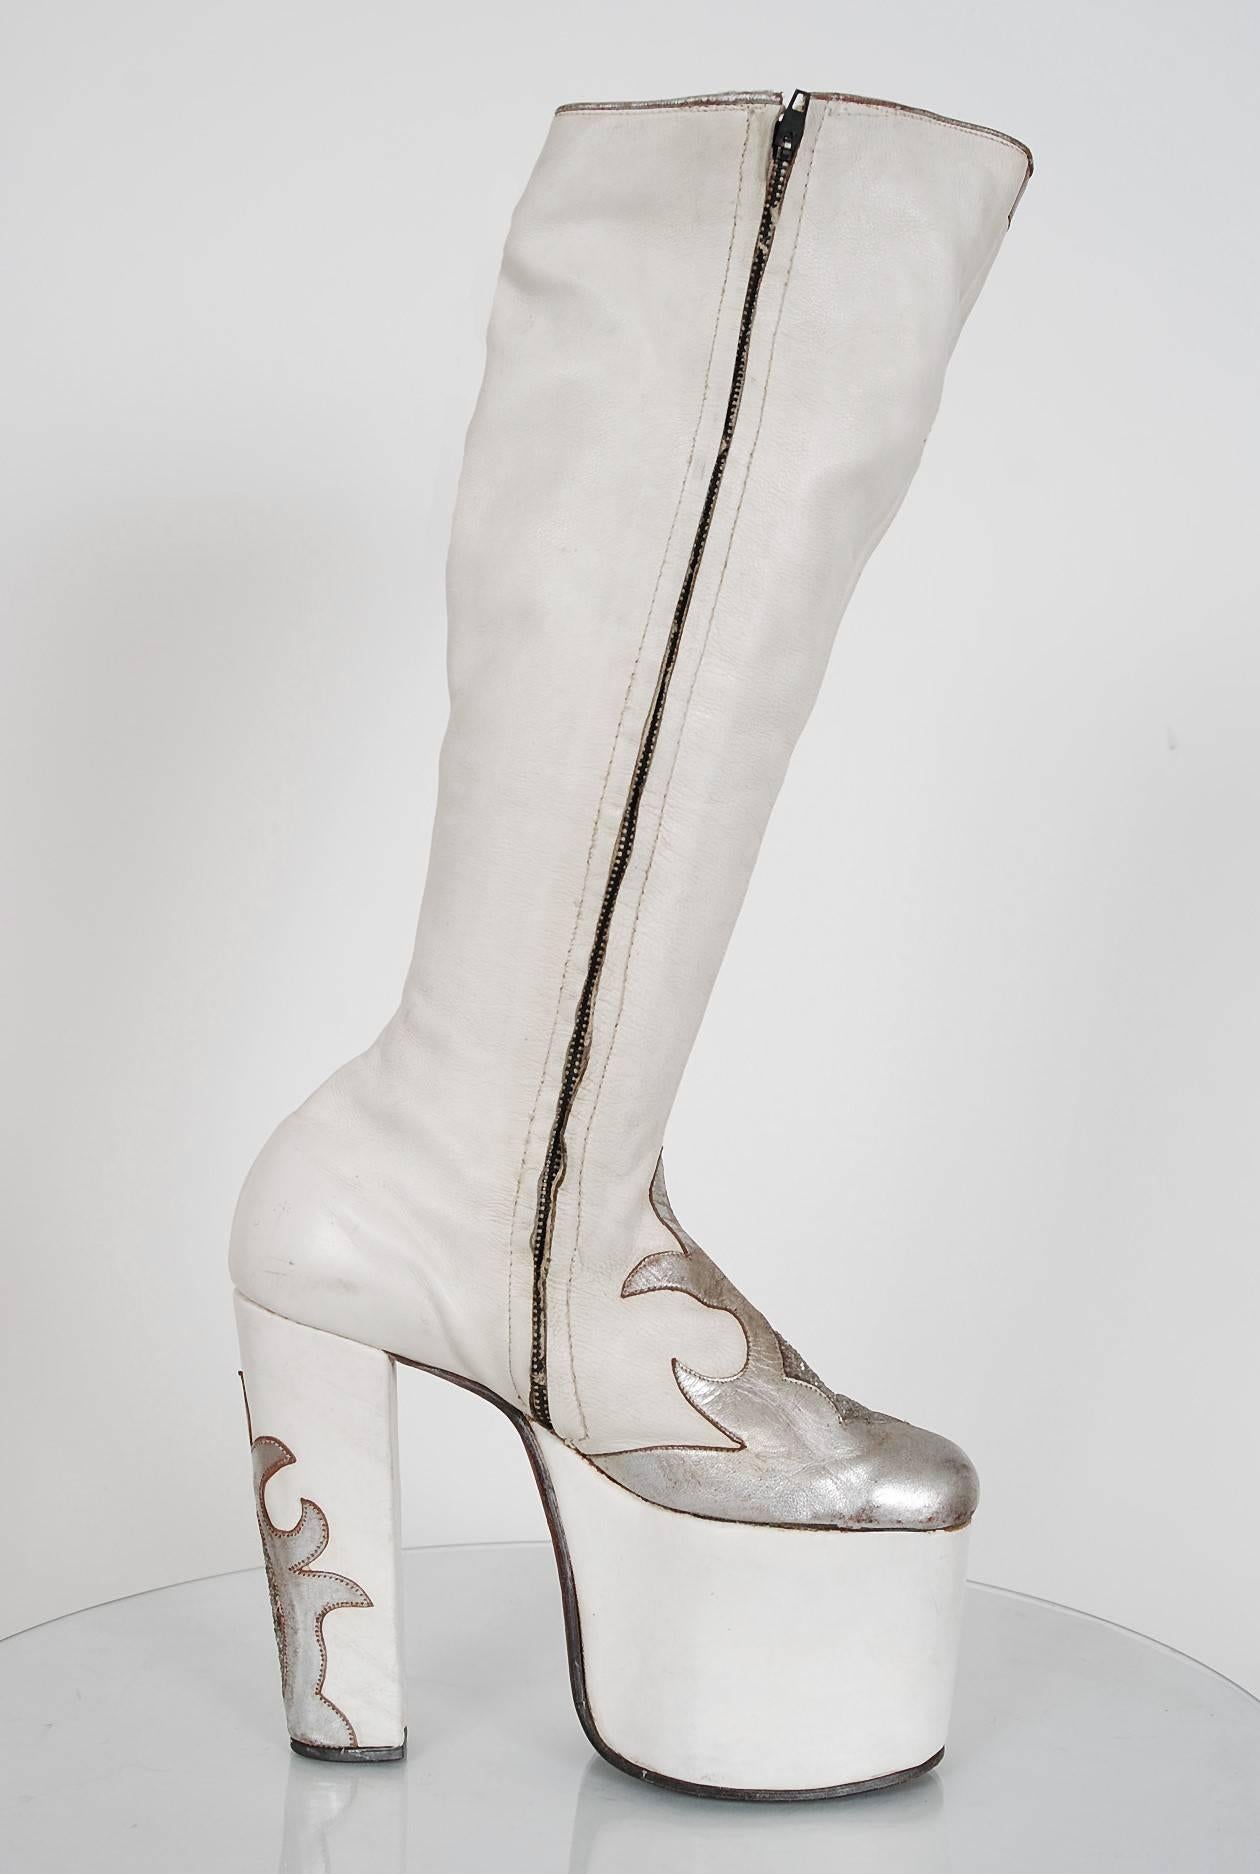 Women's or Men's 1970's White Leather & Silver Glitter Novelty Capricorn Platform Glam-Rock Boots